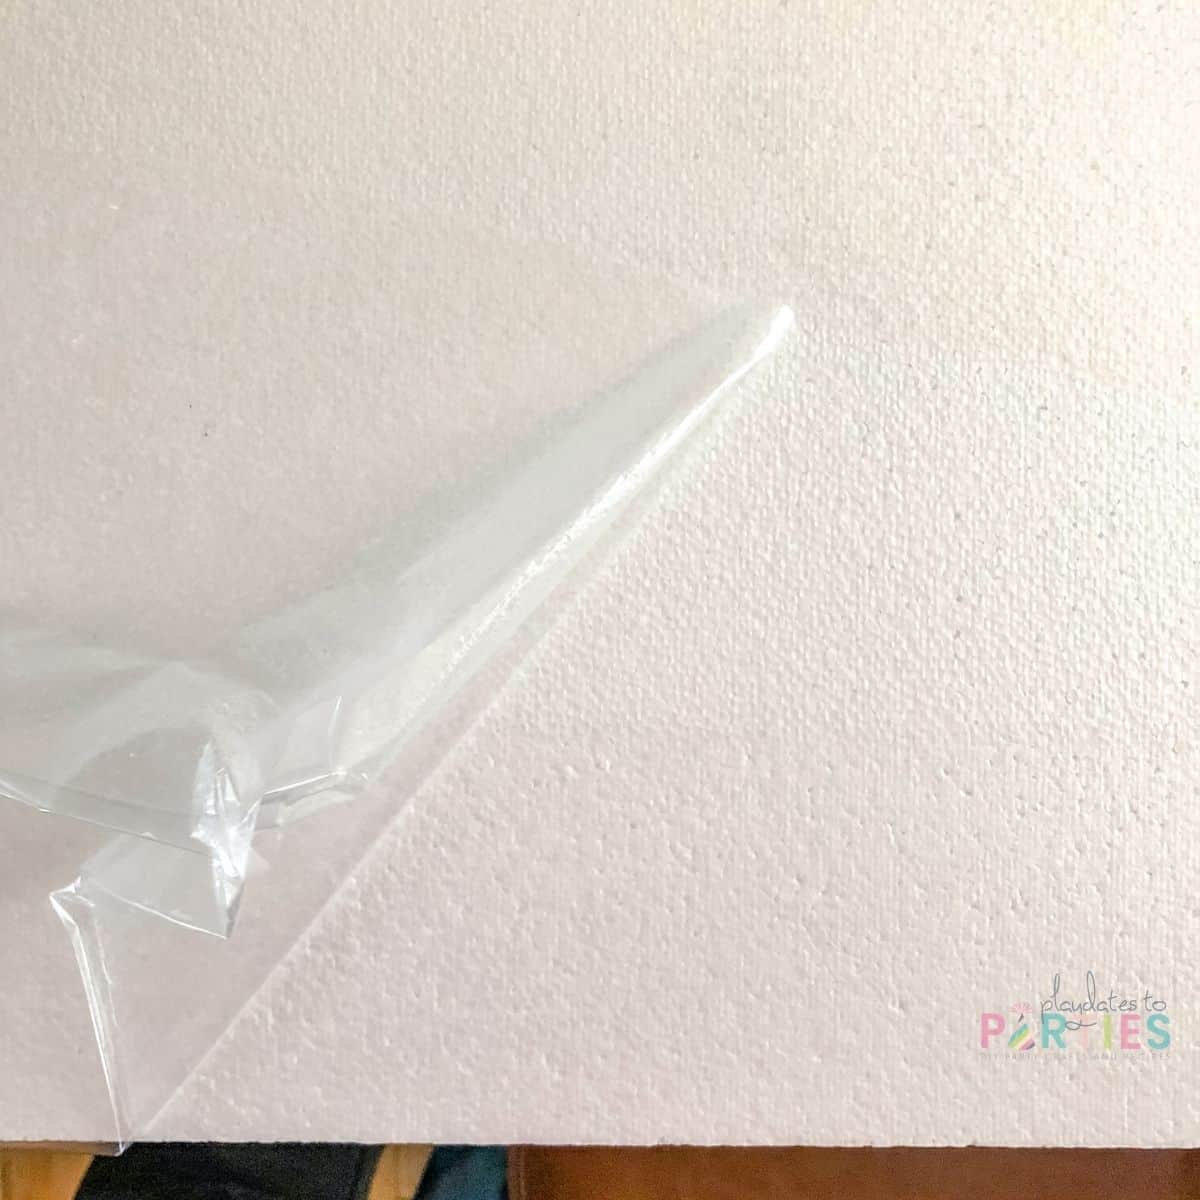 removing plastic coating from styrofoam